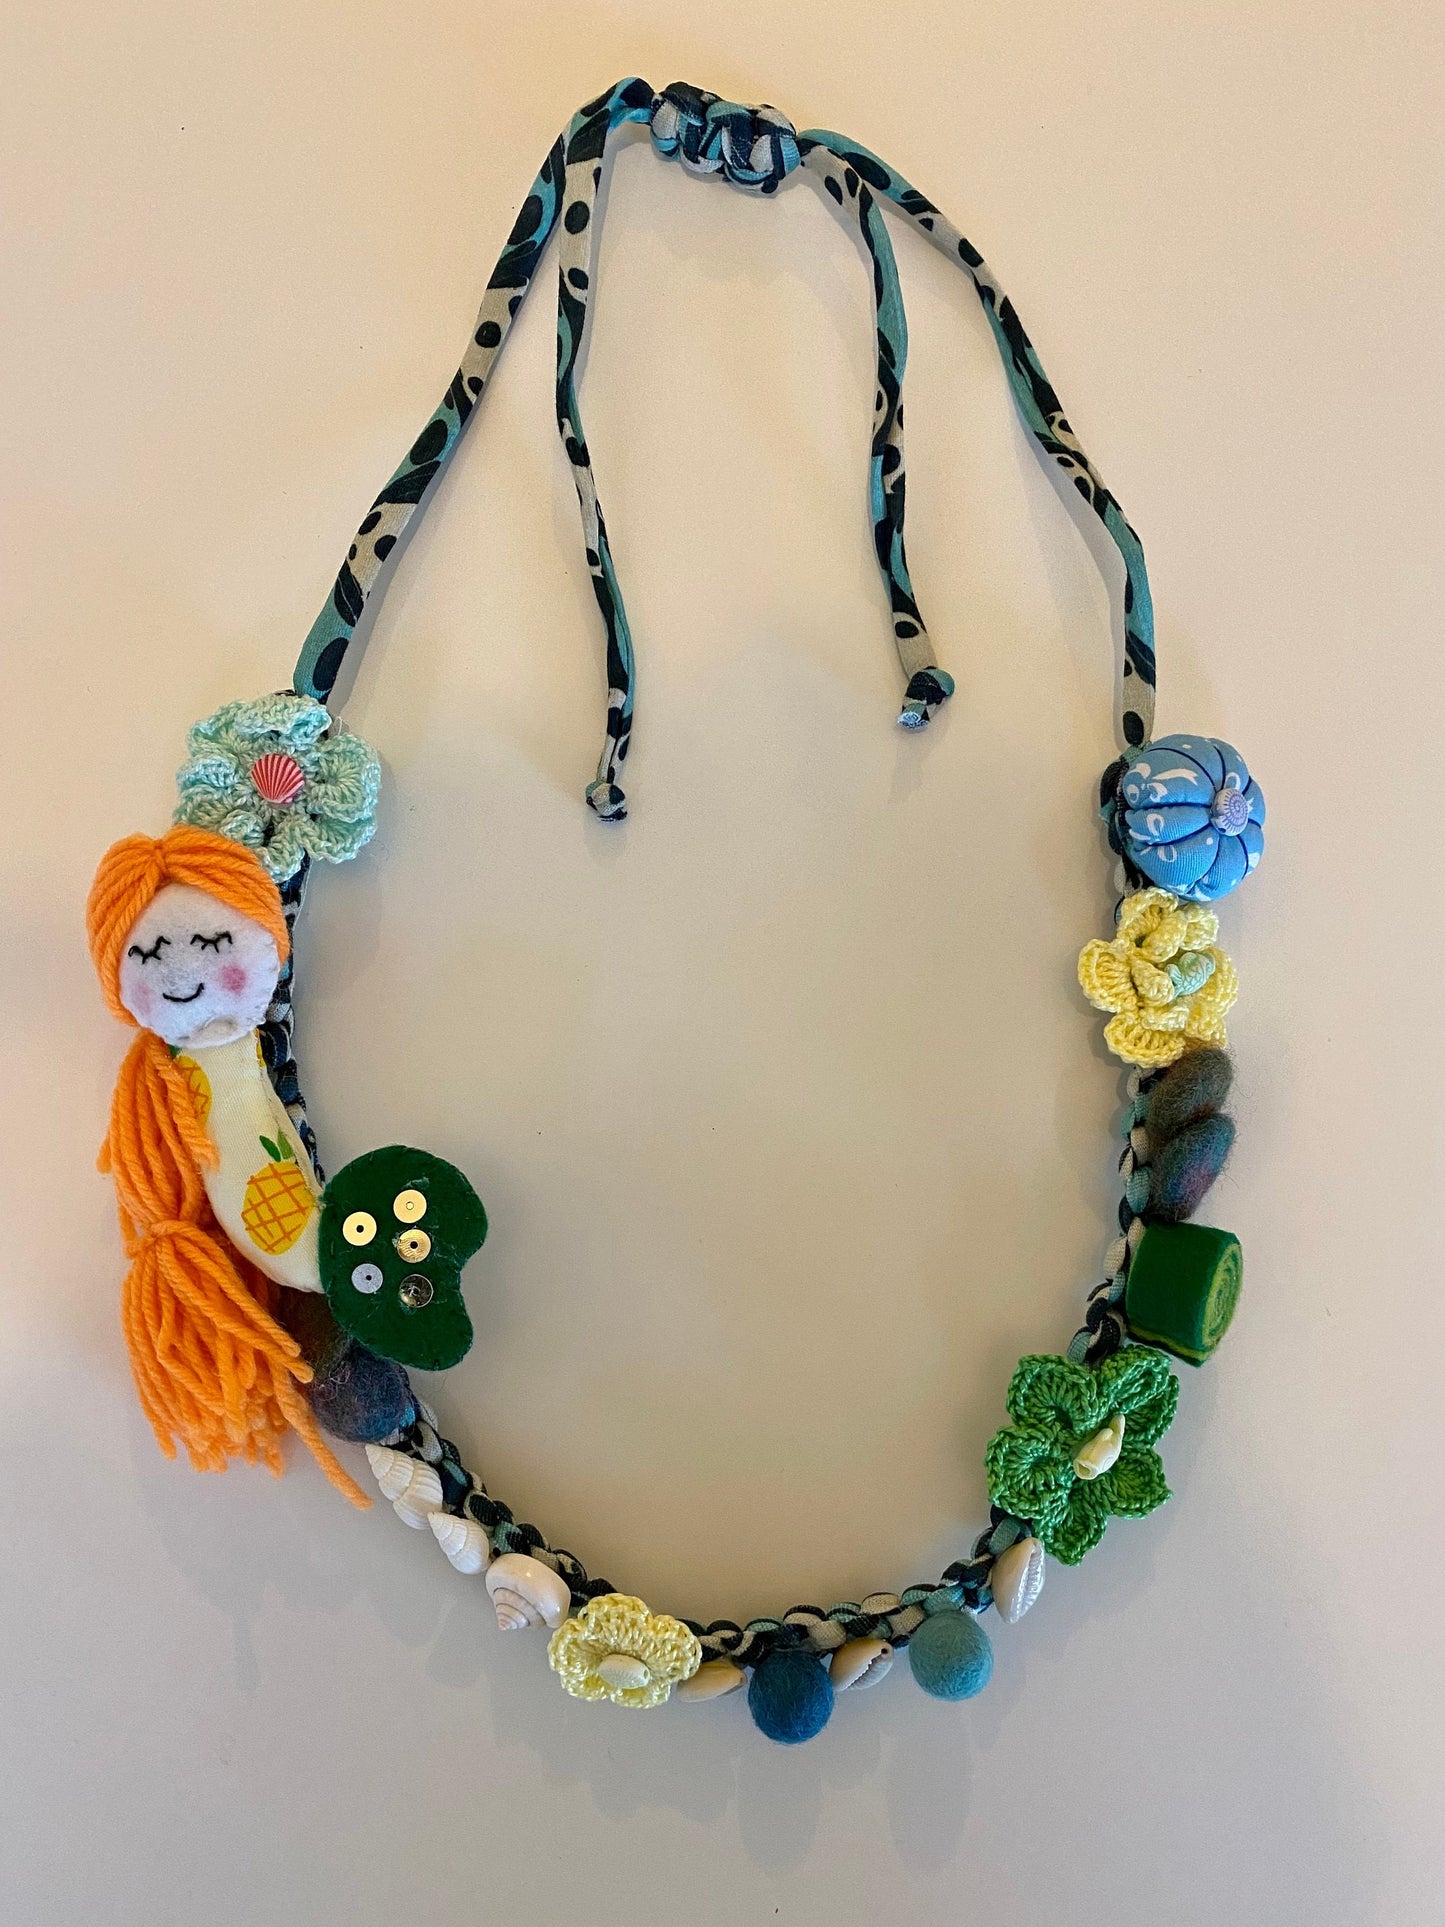 Fabric Necklace - Mermaid, Seashells, Flowers, Fabric, Buttons, T-Shirt Yarn, Handmade